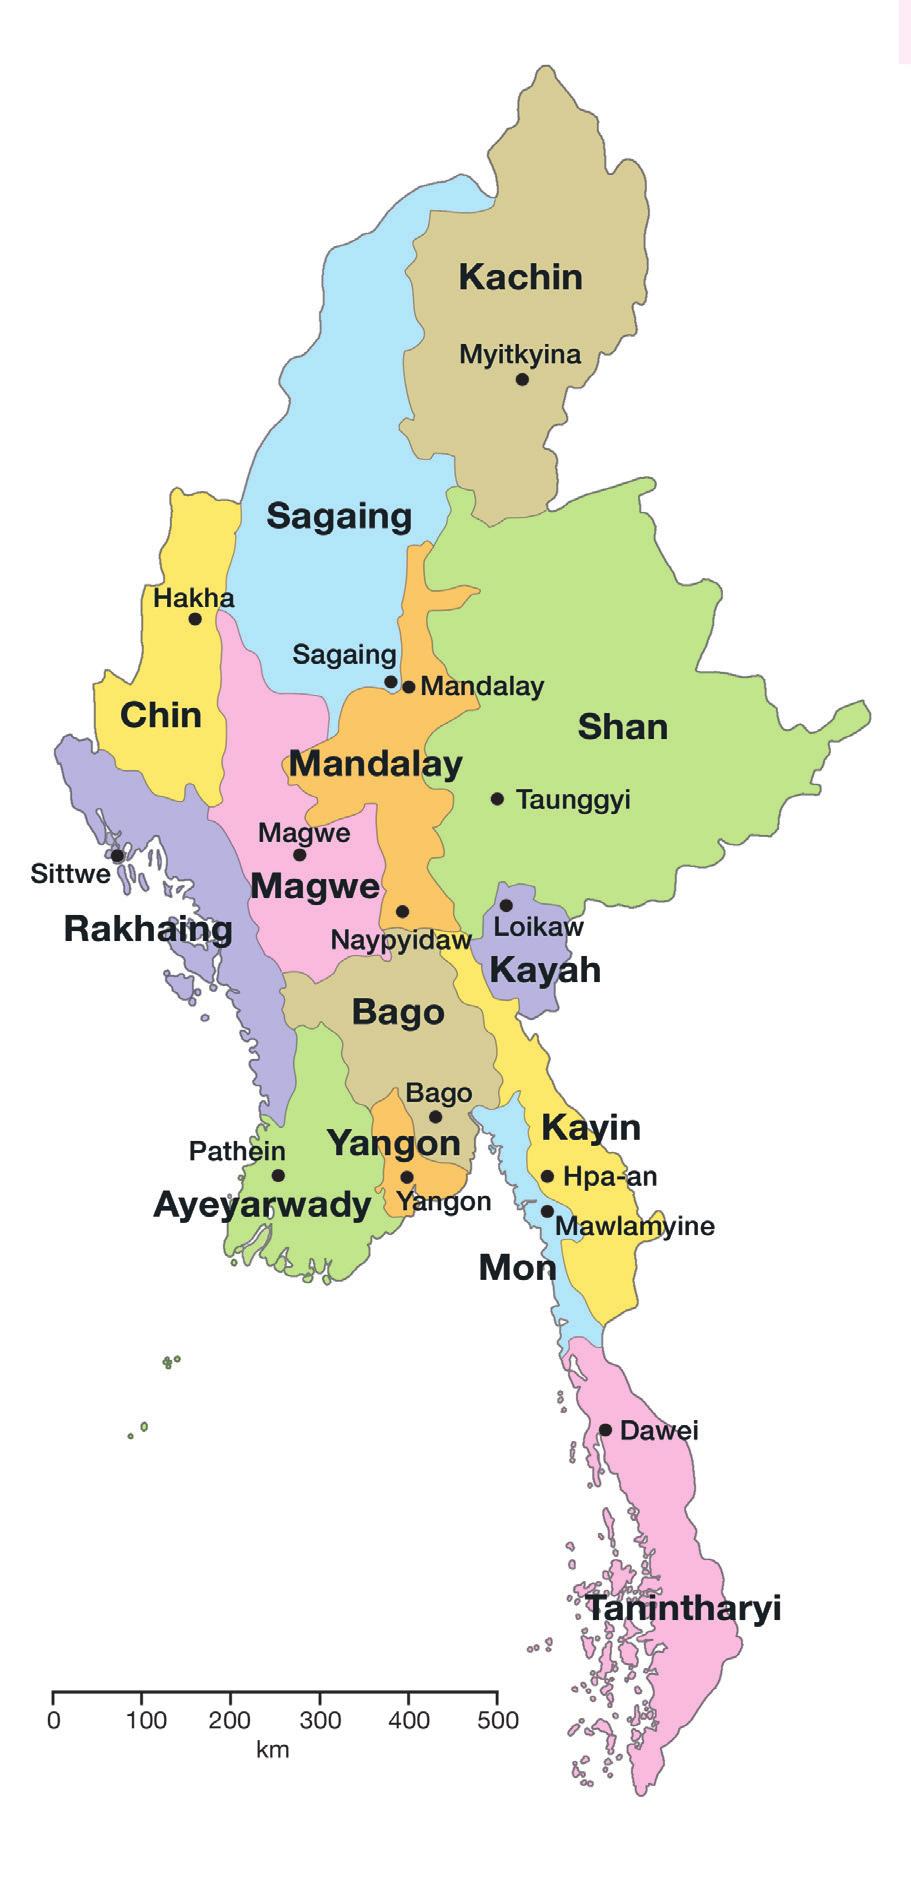 The Rohingya are a Muslim minority living in Rakhine (Rakhaing) province in Myanmar (Figure 3).